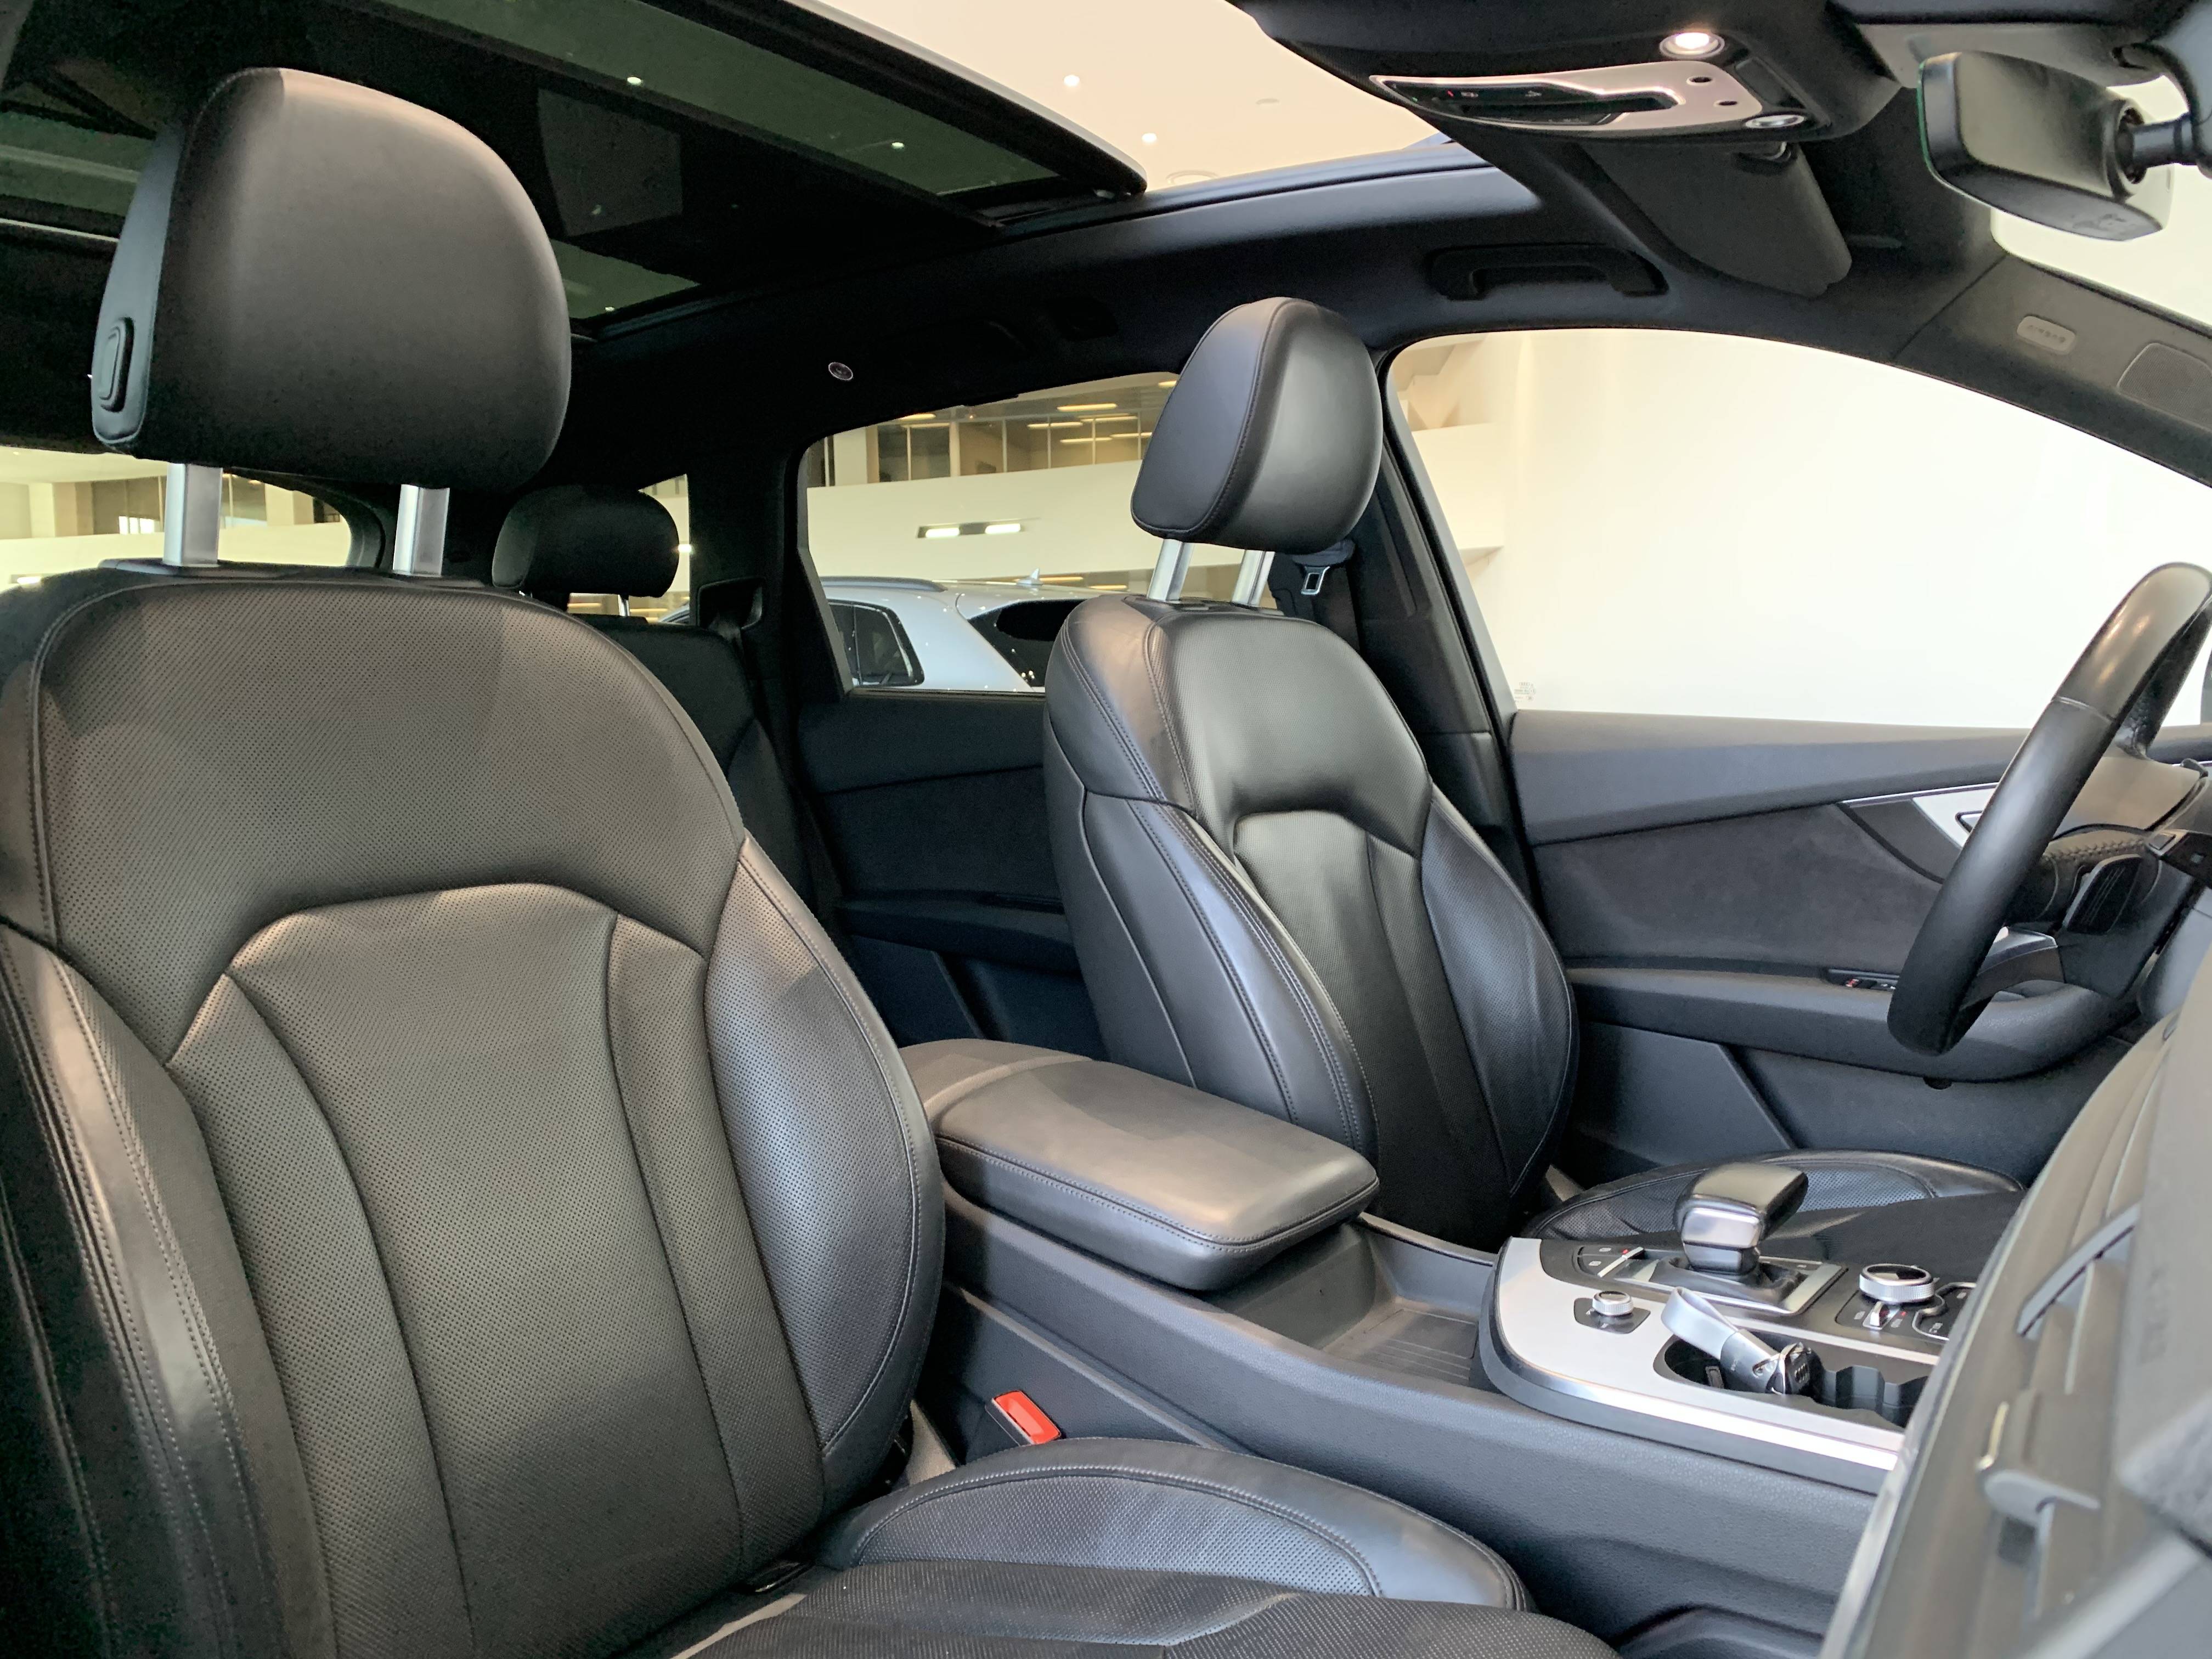 Audi SQ7 interior big